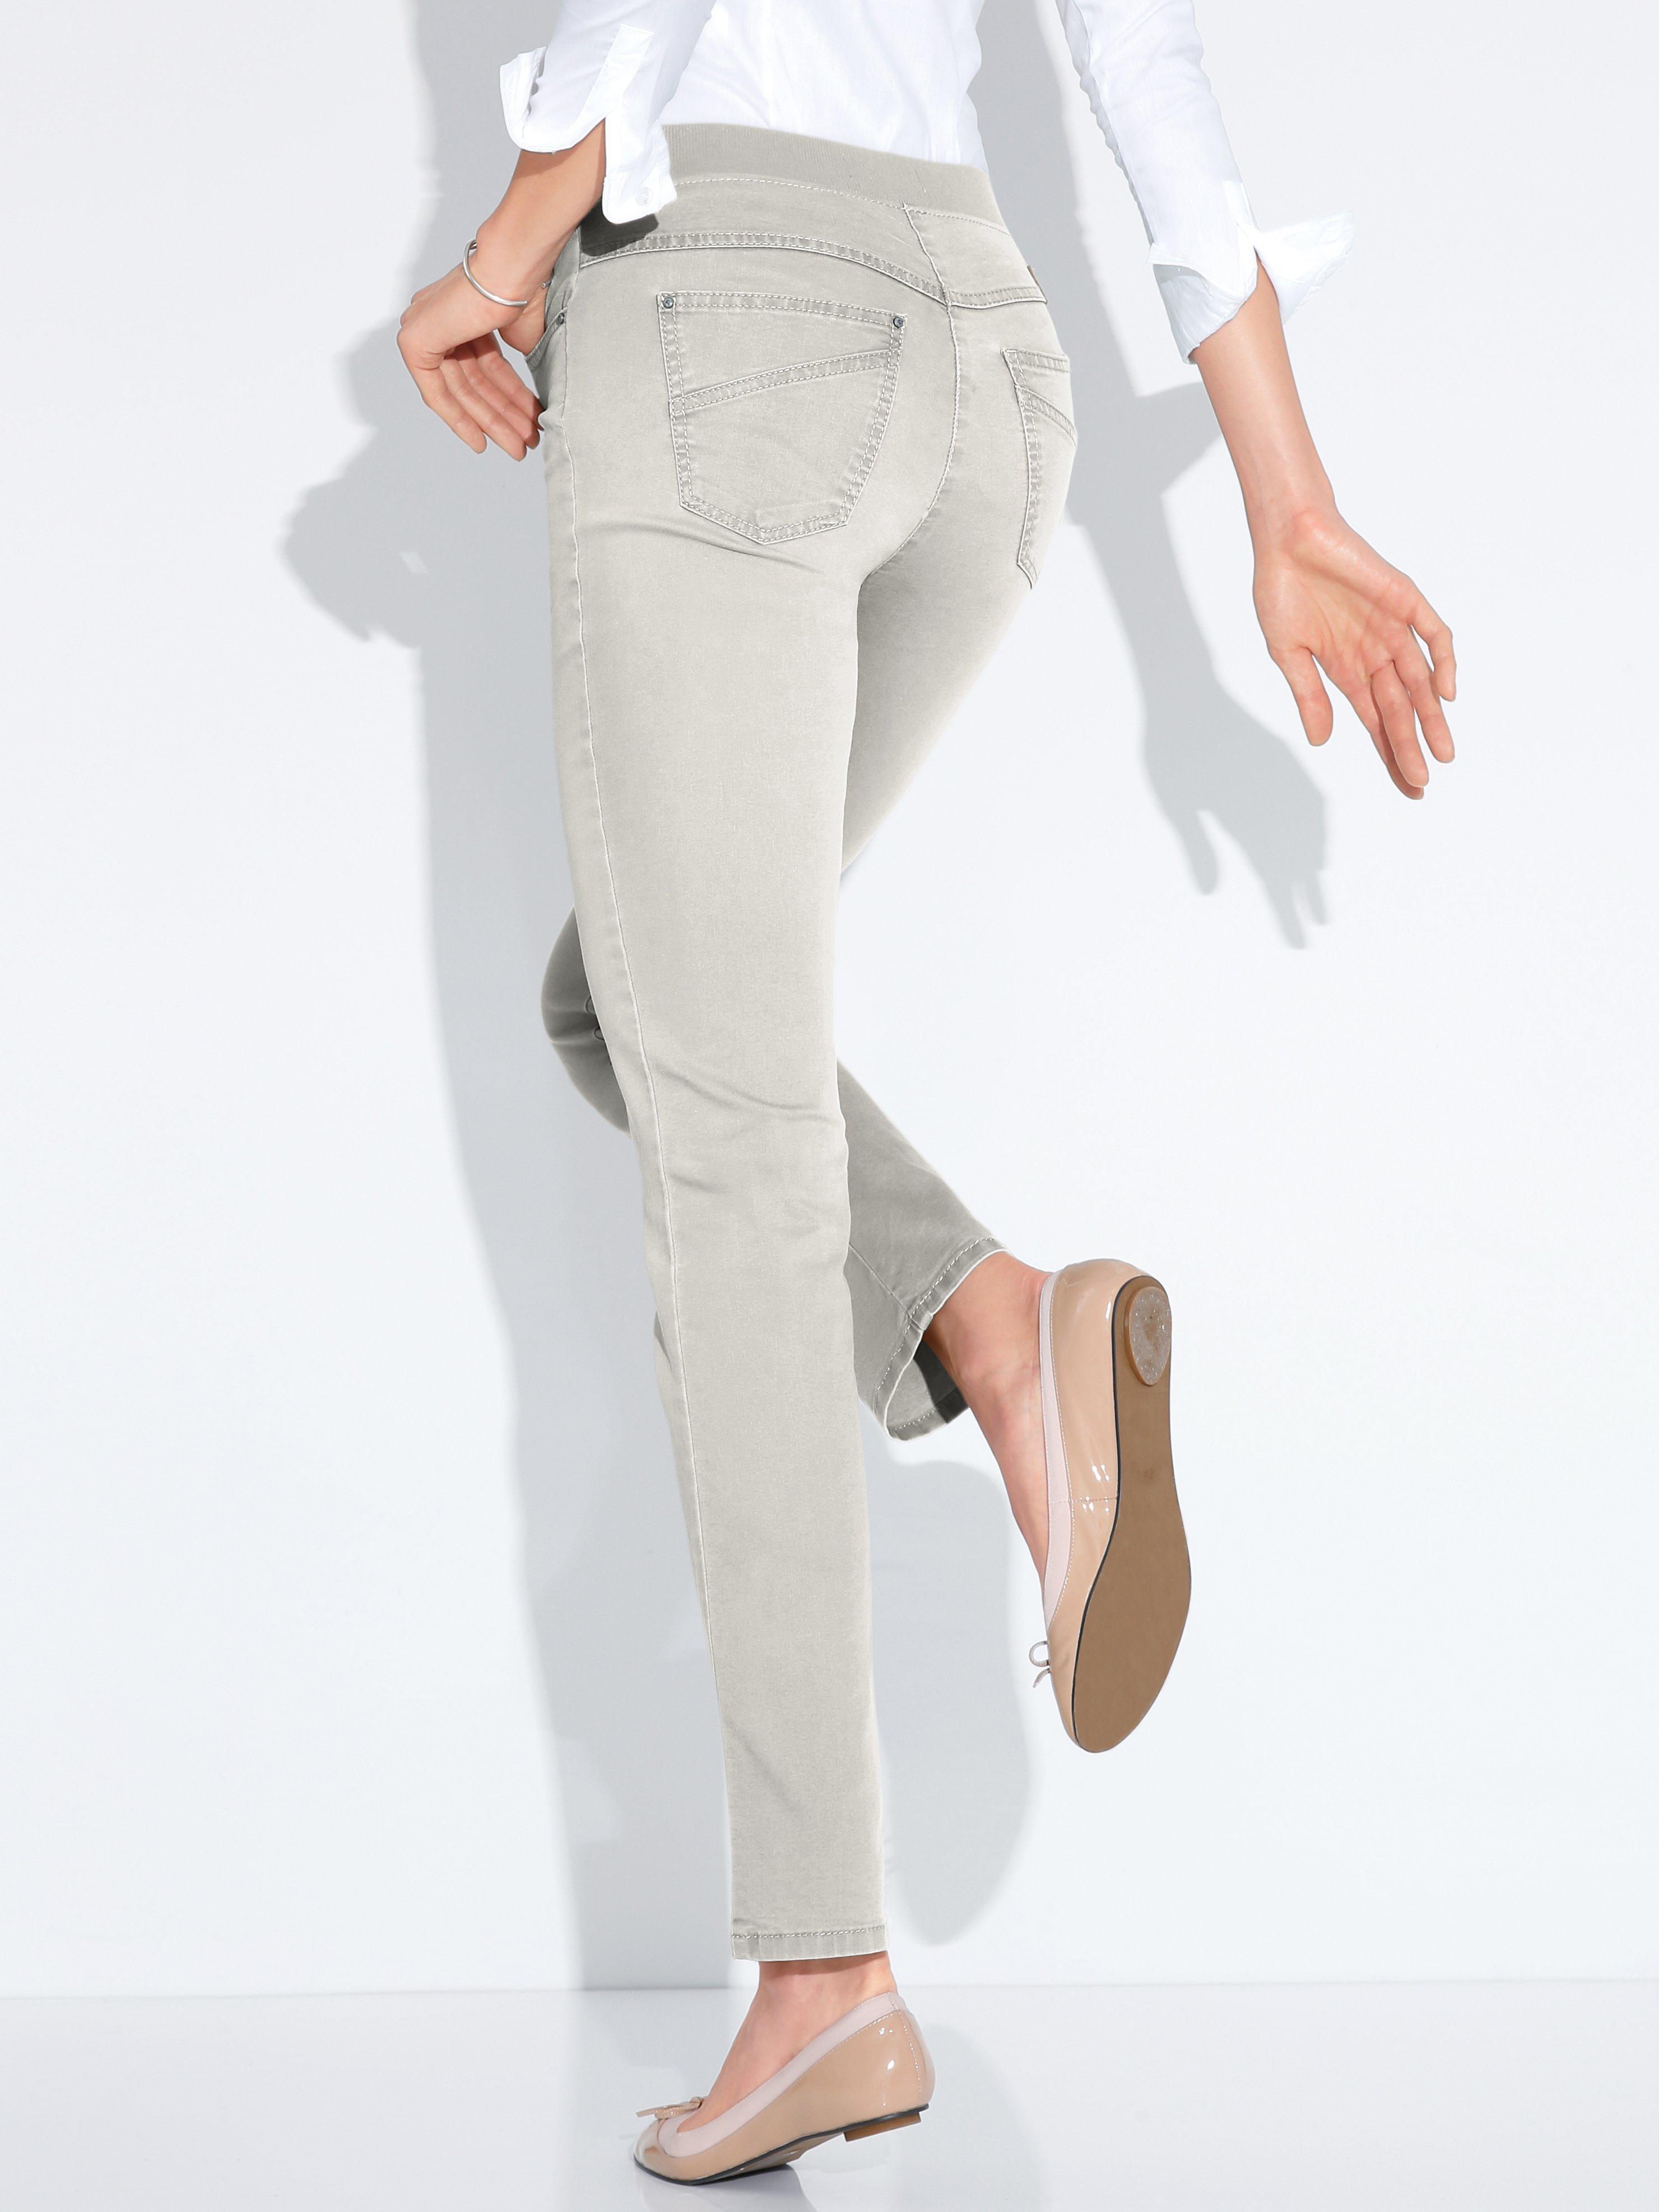 Raphaela by Brax - Le jean coupe ProForm Slim modèle Pamina